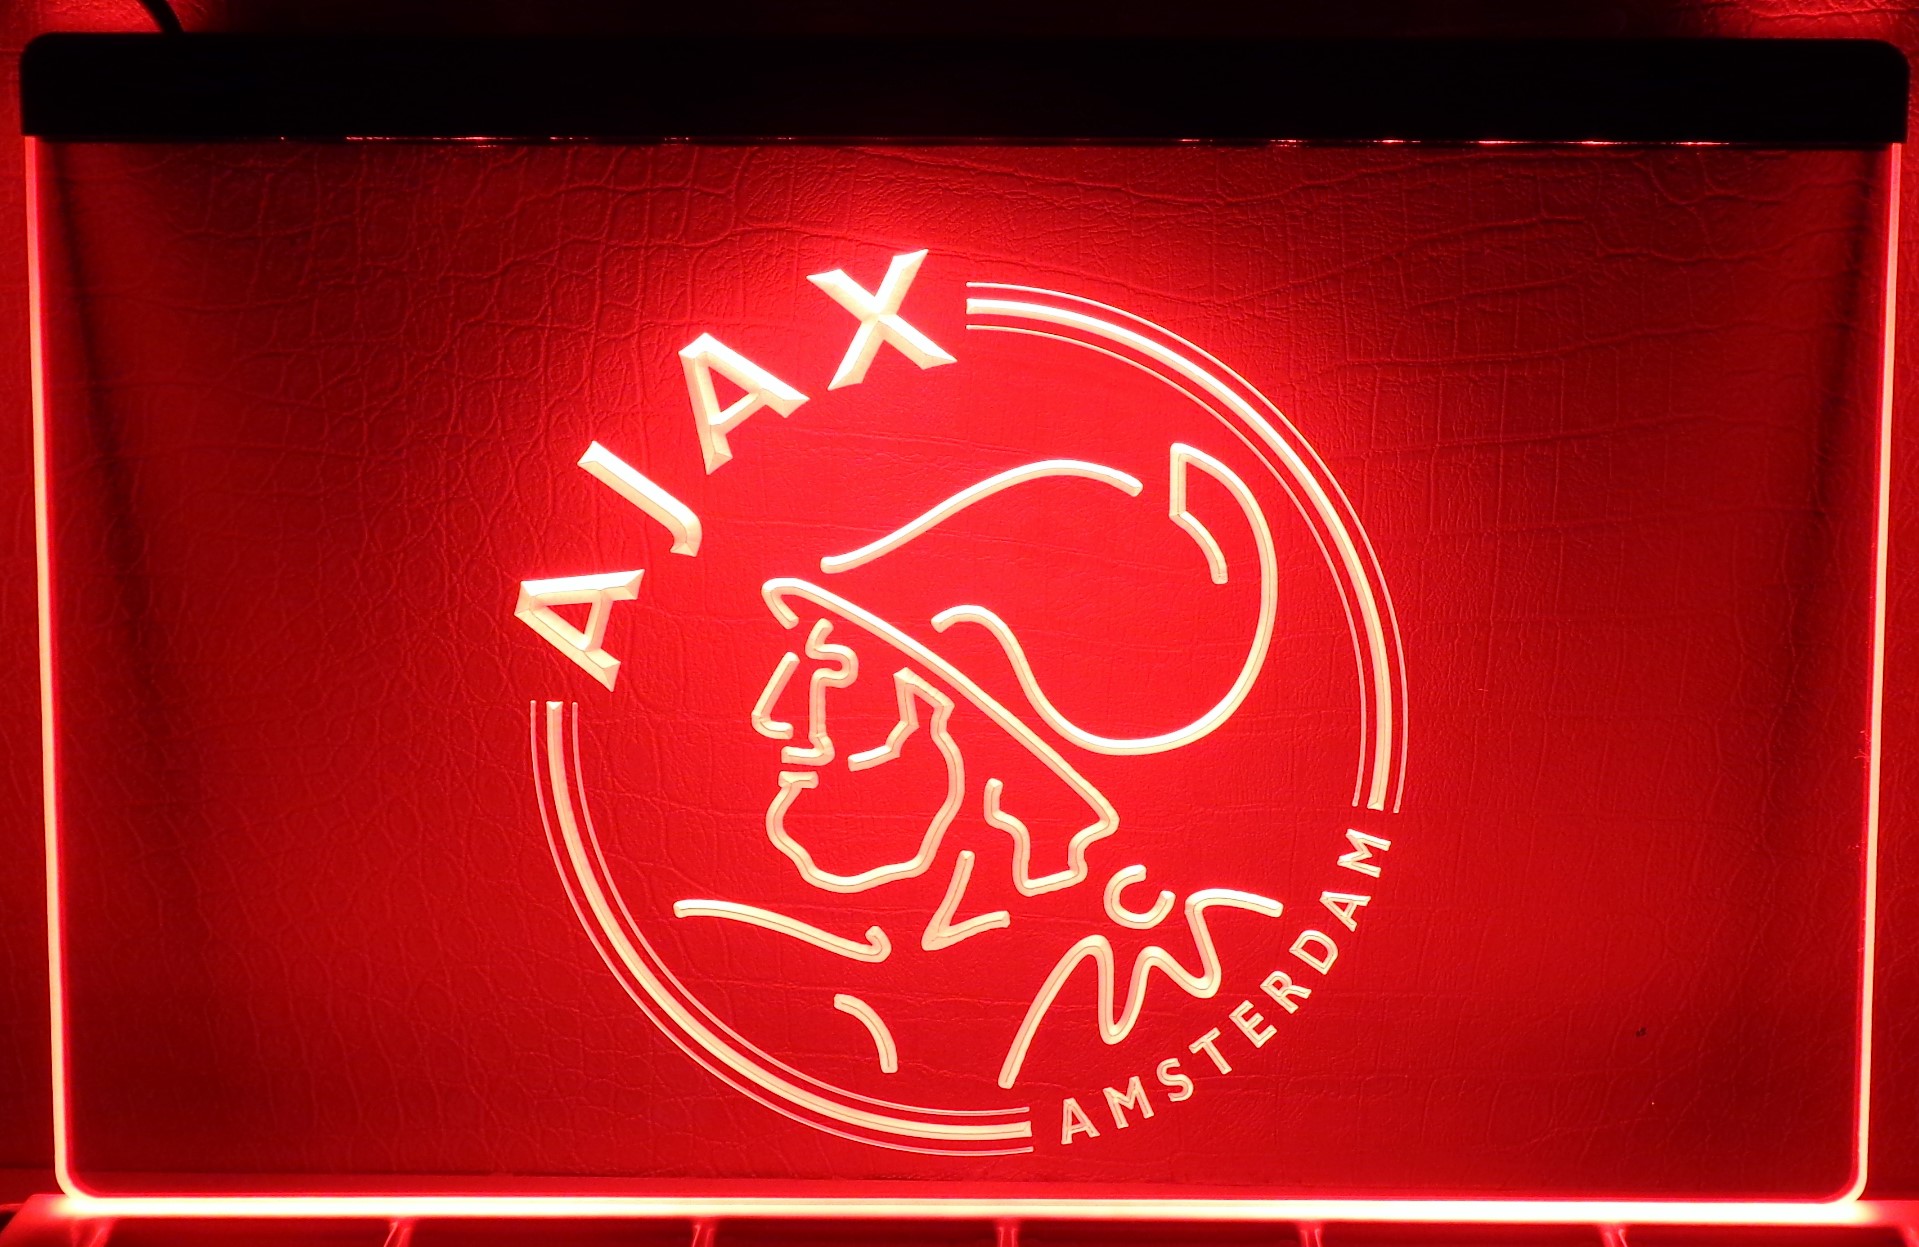 AJAX 3D CLUB LOGO LED VERLICHTING DISPLAY - Americanshop